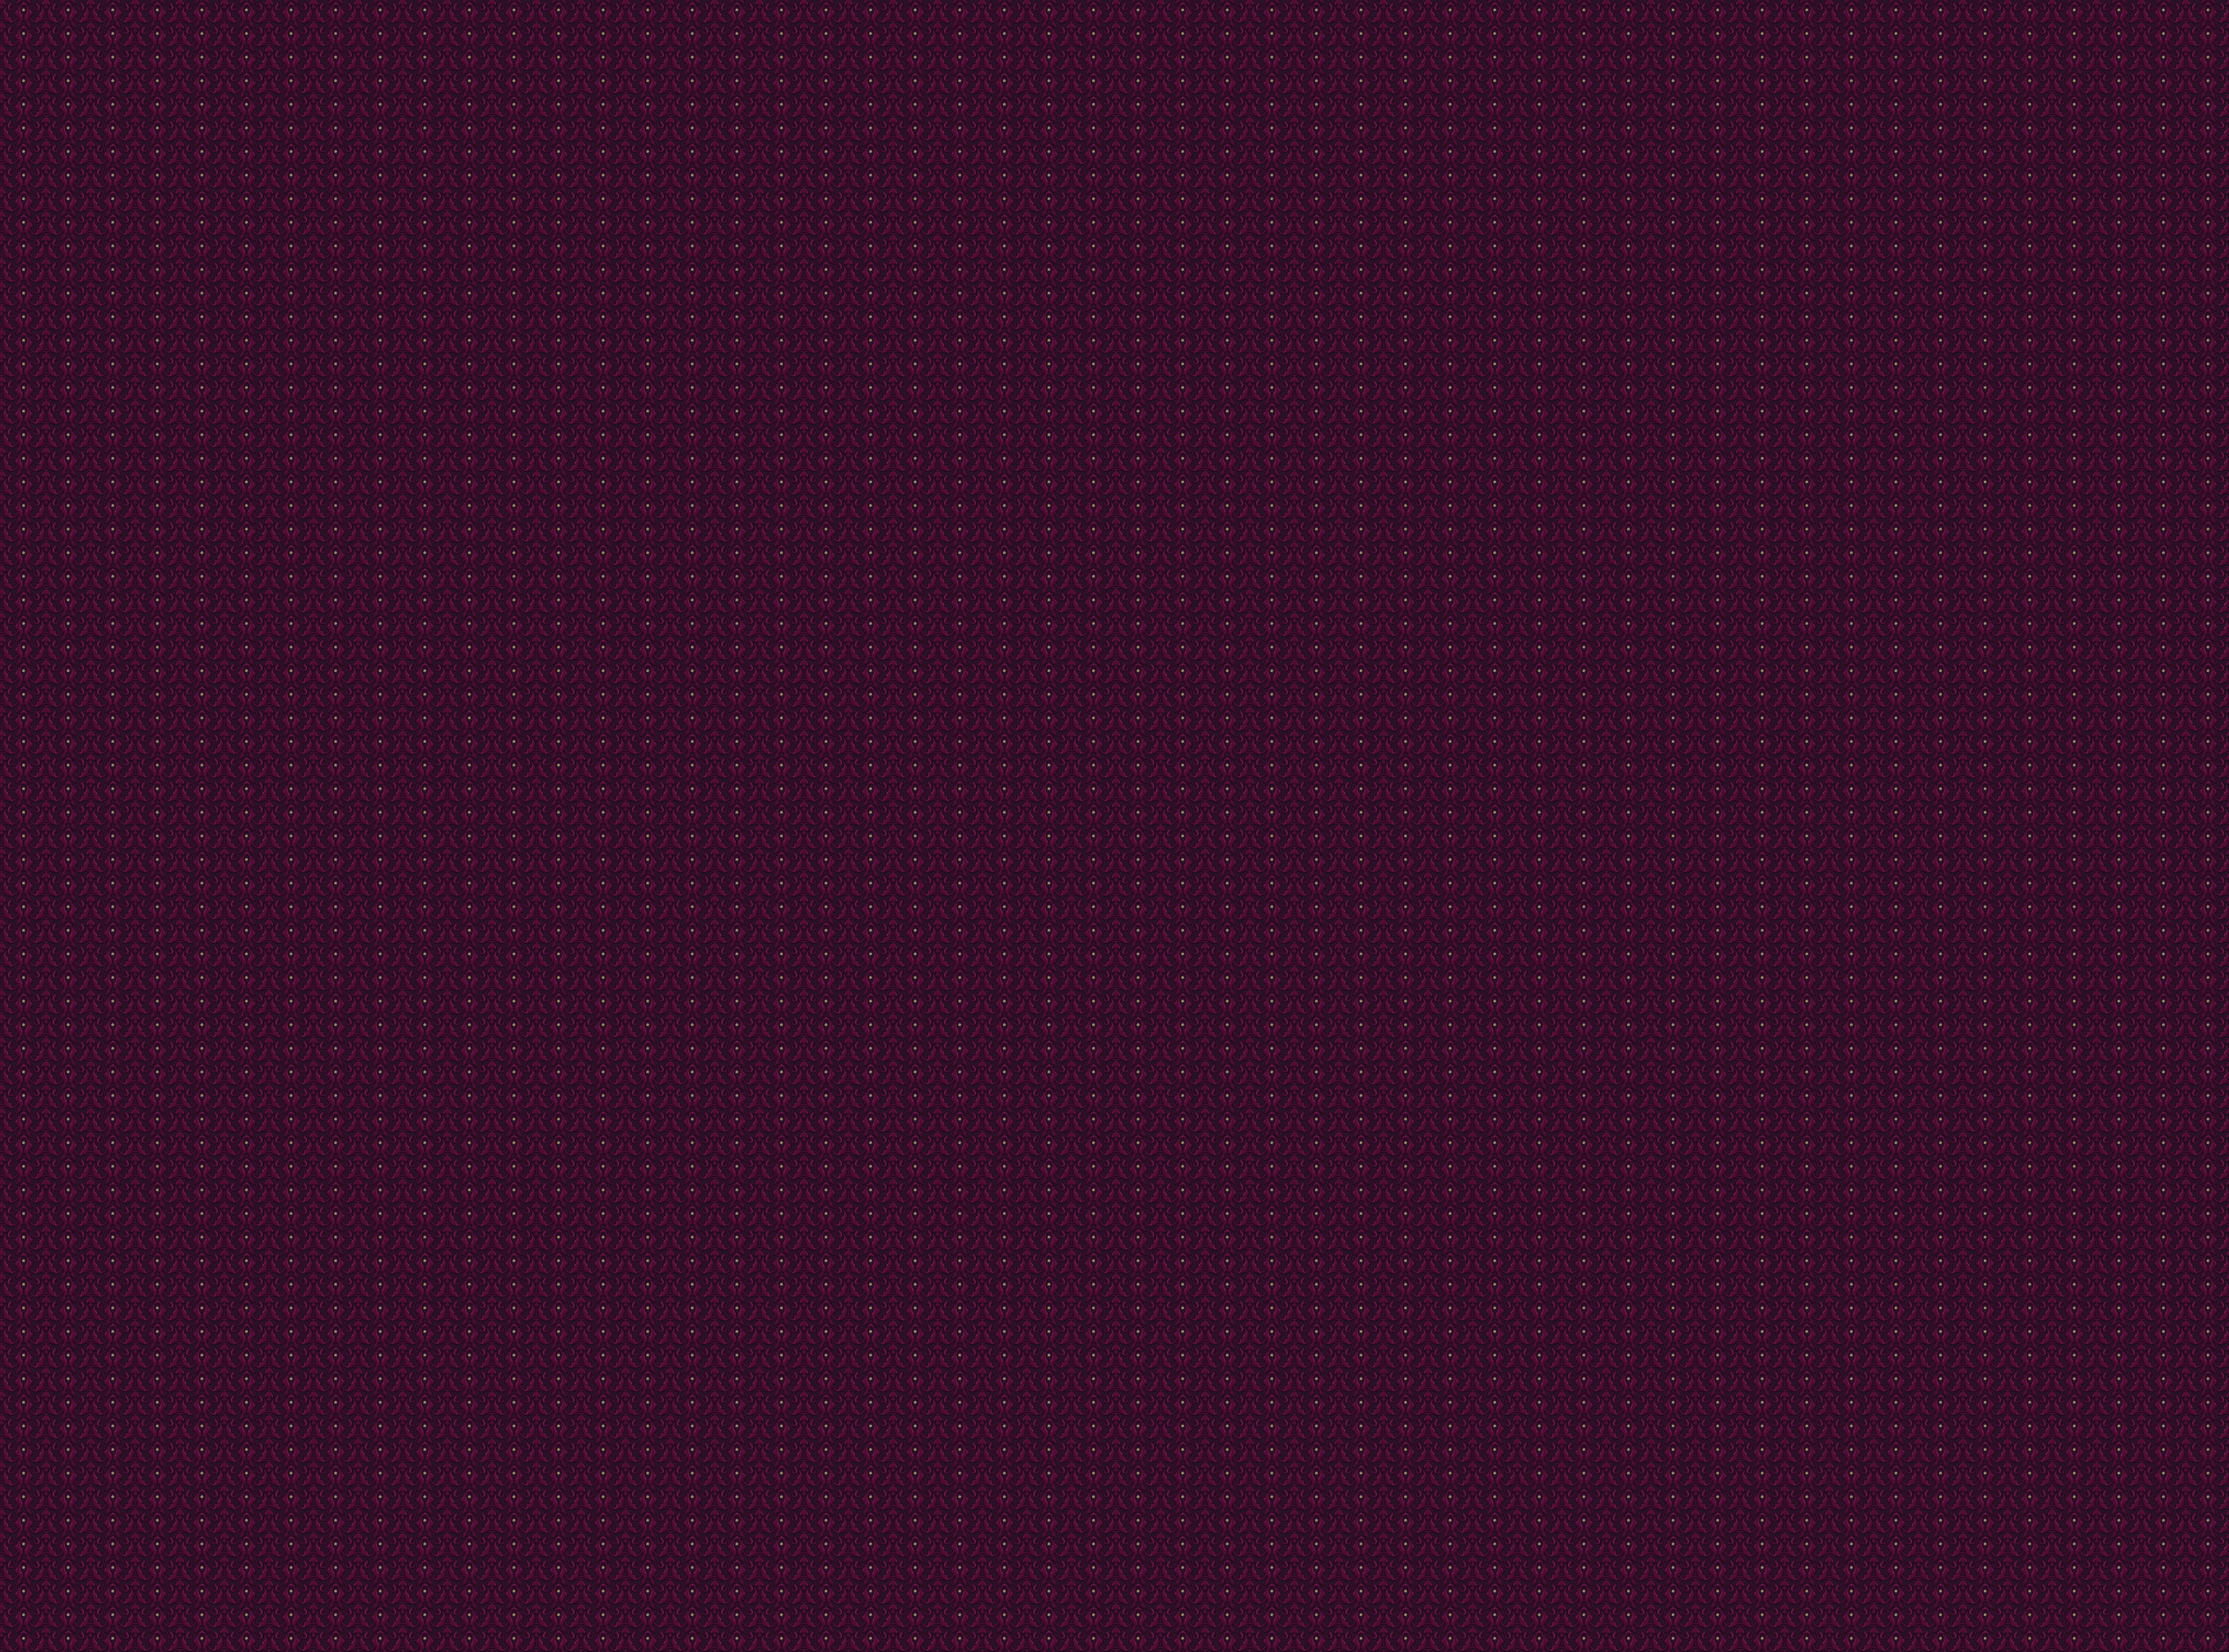 Dark Purple seamless background